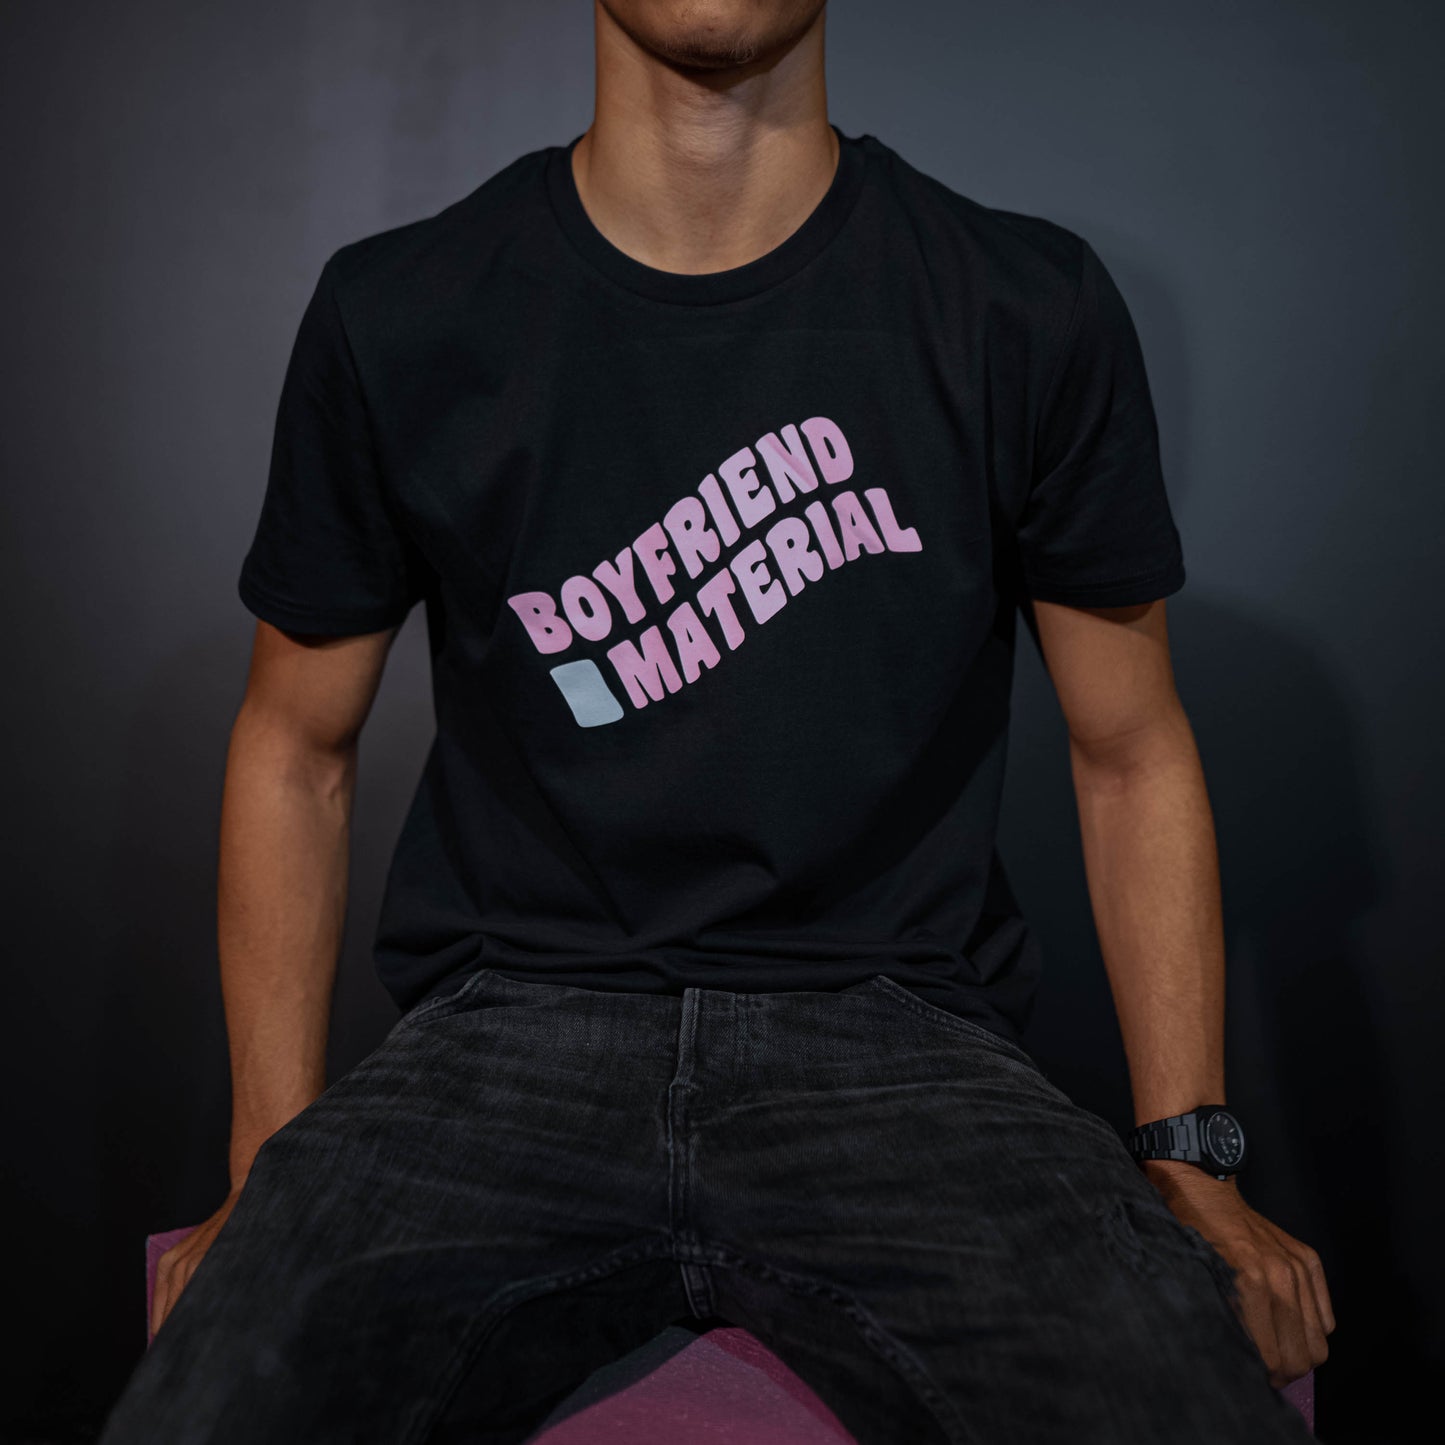 T-Shirt Boyfriend material